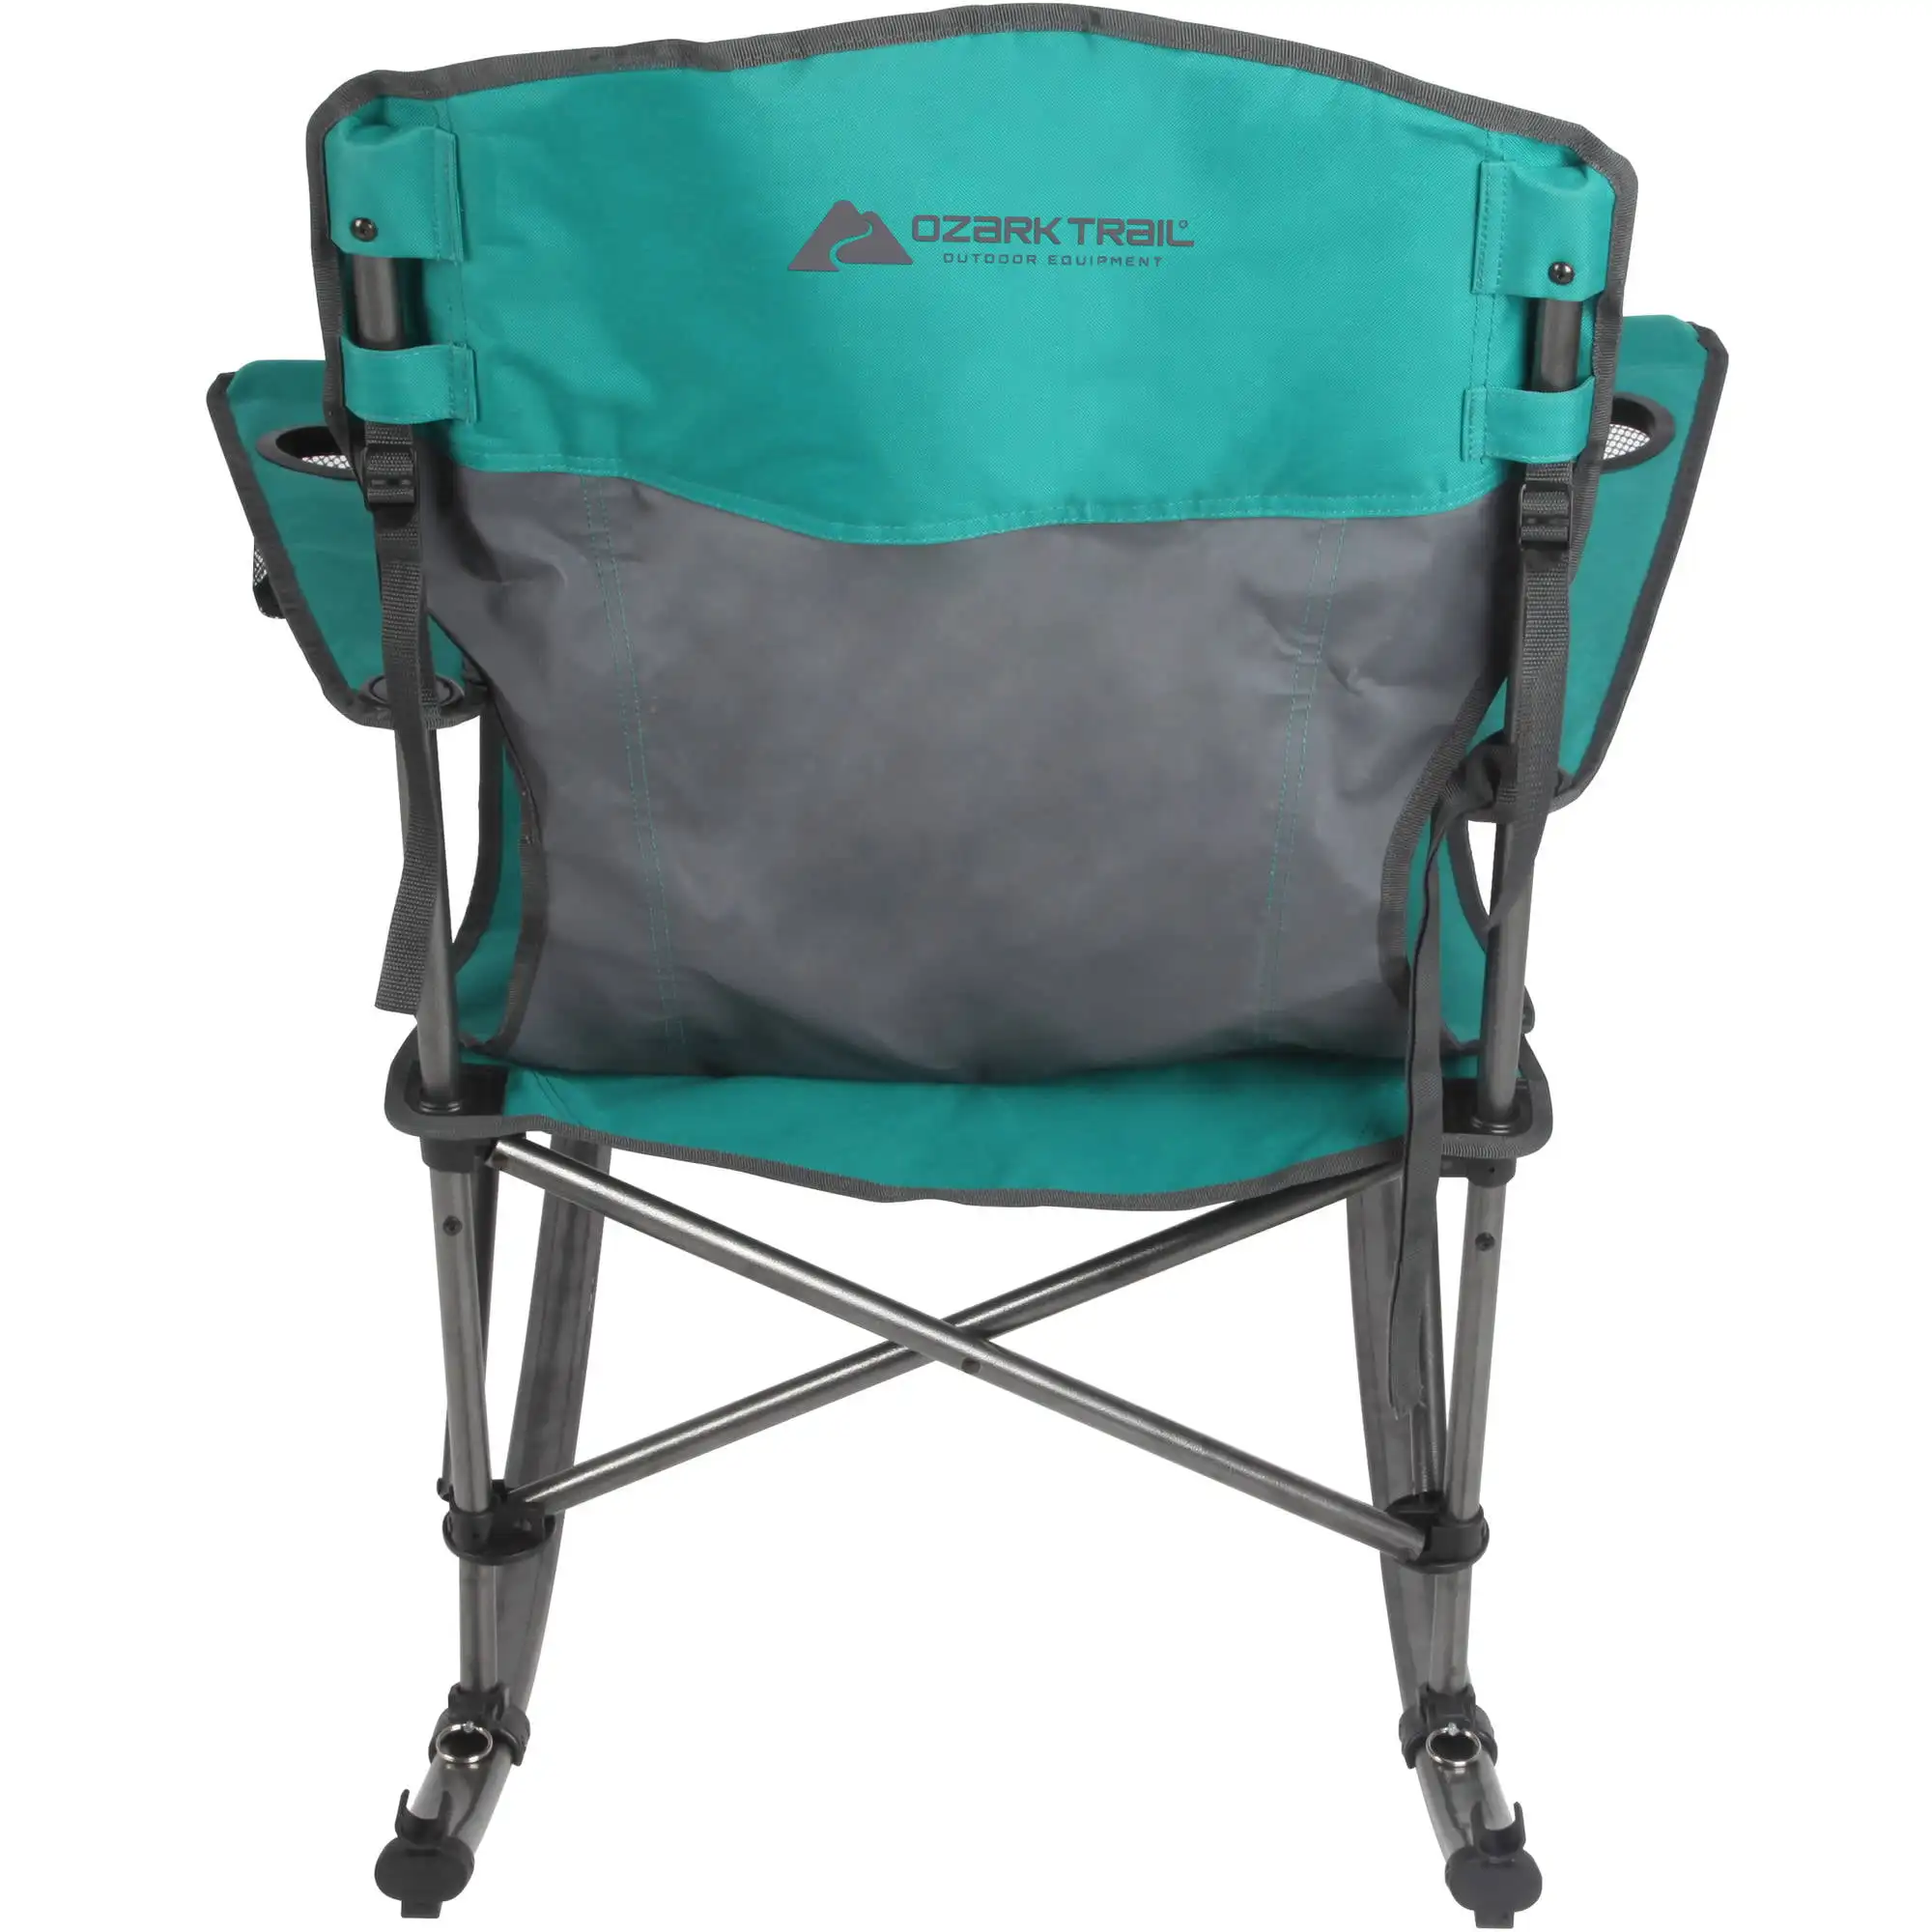 Ozark trail foldable comfort camping rocking chair green 300 lbs capacity adult thumb200